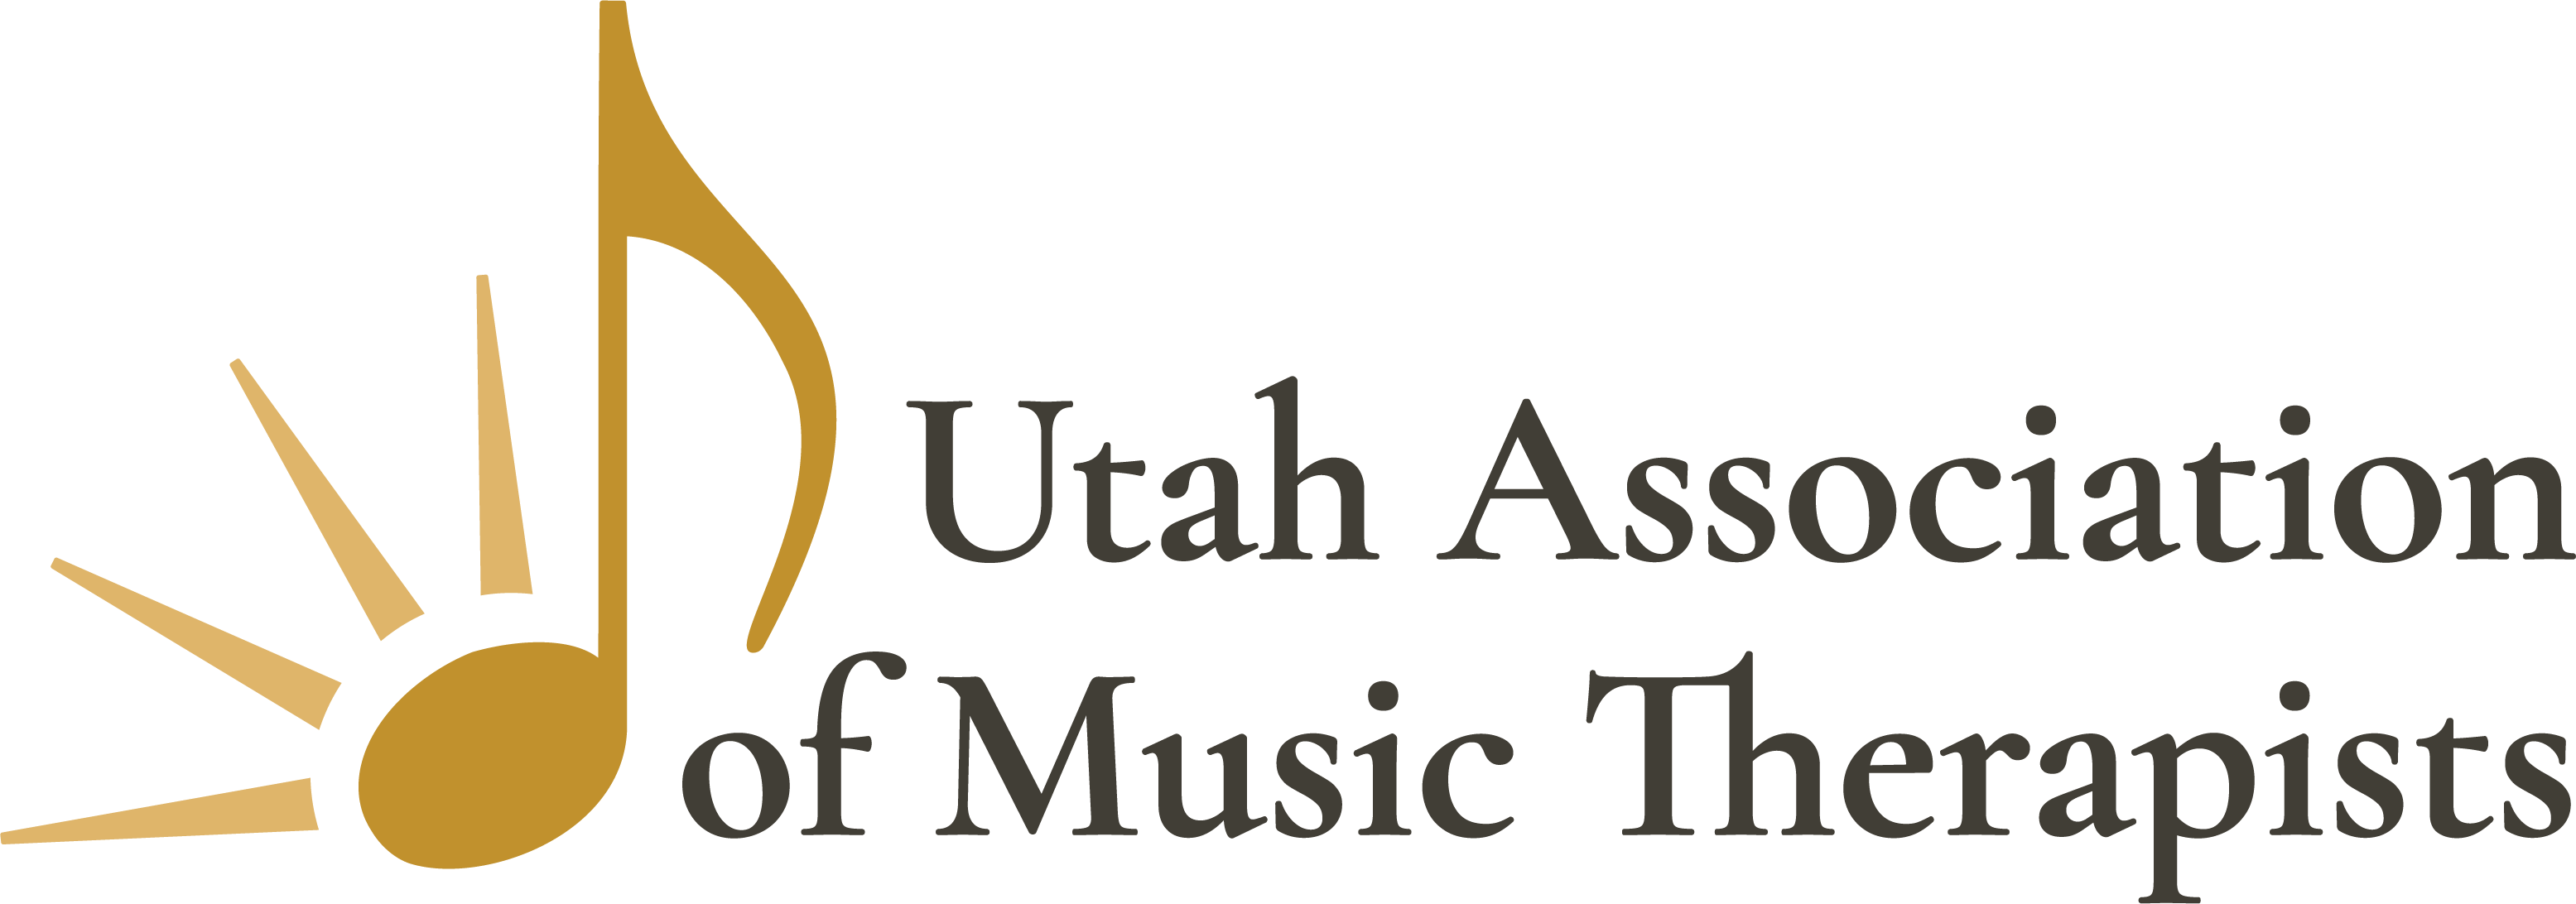 Utah Association of Music Therapists